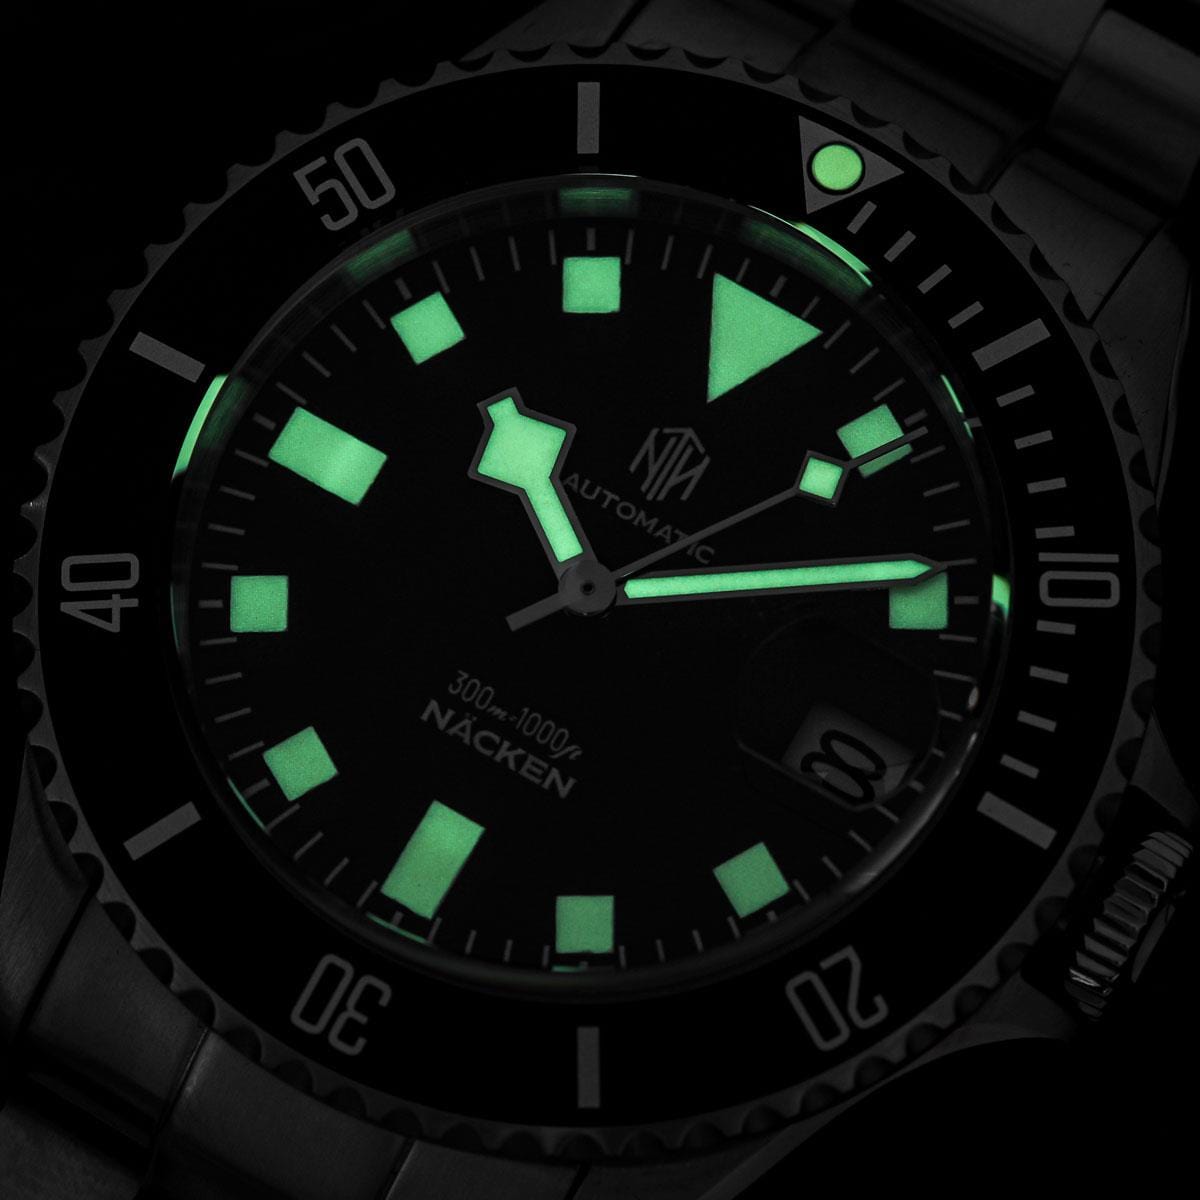 NTH Näcken Dive Watch - Admiral Blue - WatchGecko Exclusive - NEARLY NEW